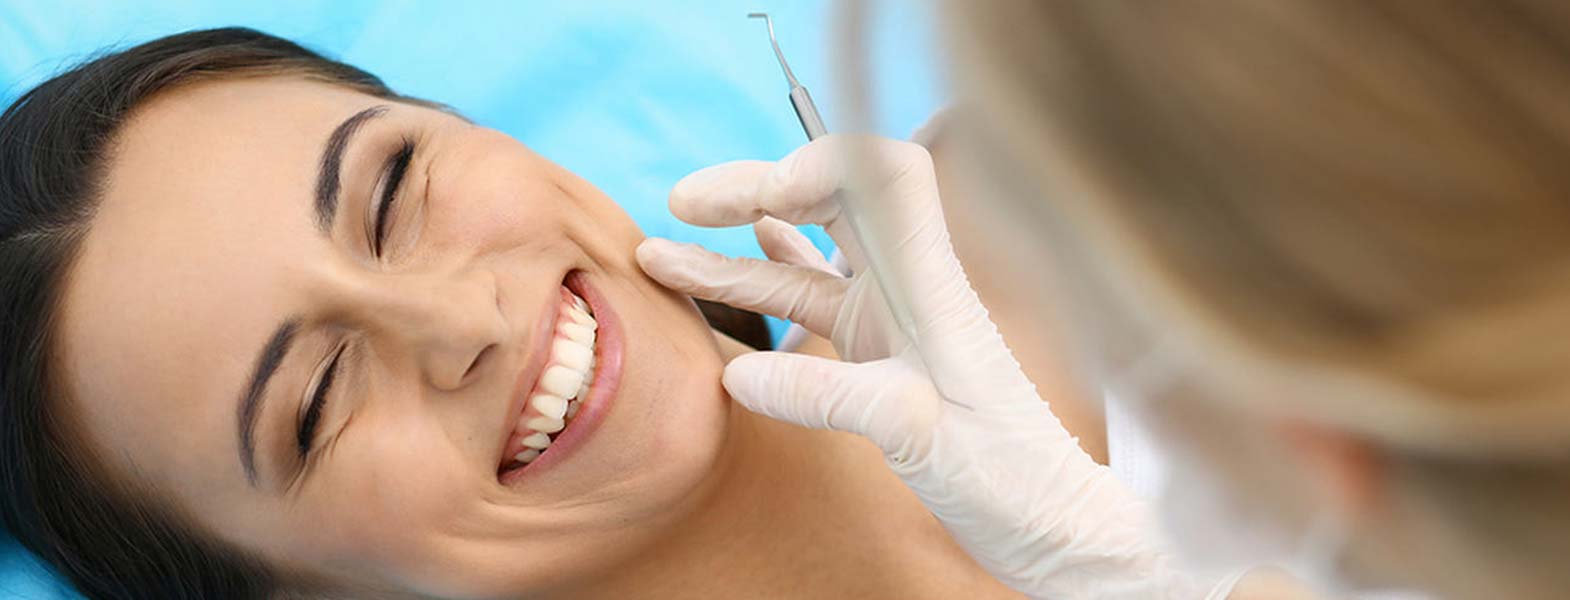 Pacjent na wizycie u stomatologa